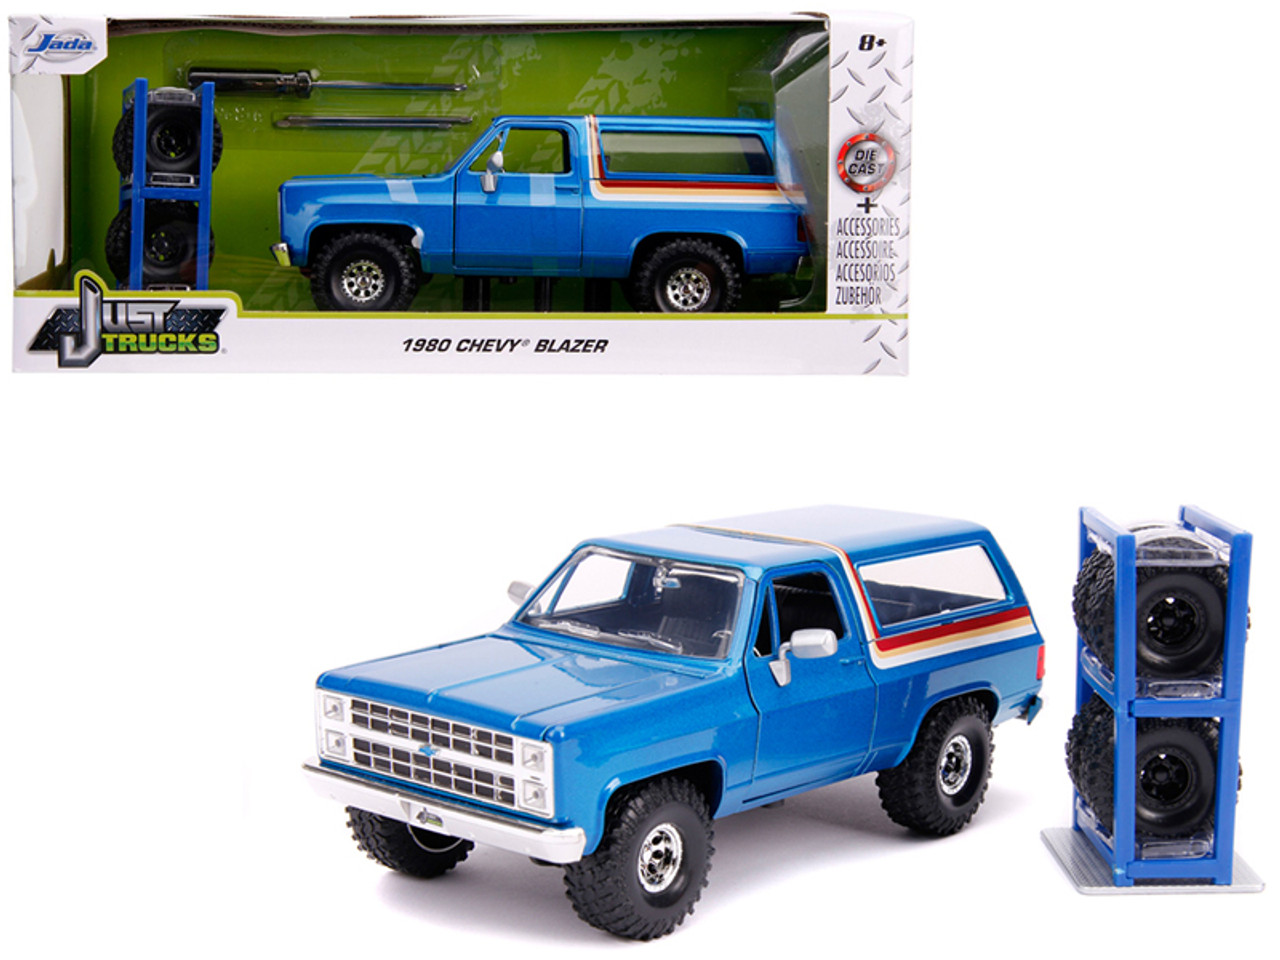 1980 Chevrolet Blazer Blue Metallic with Stripes with Extra Wheels "Just Trucks" Series 1/24 Diecast Model Car by Jada